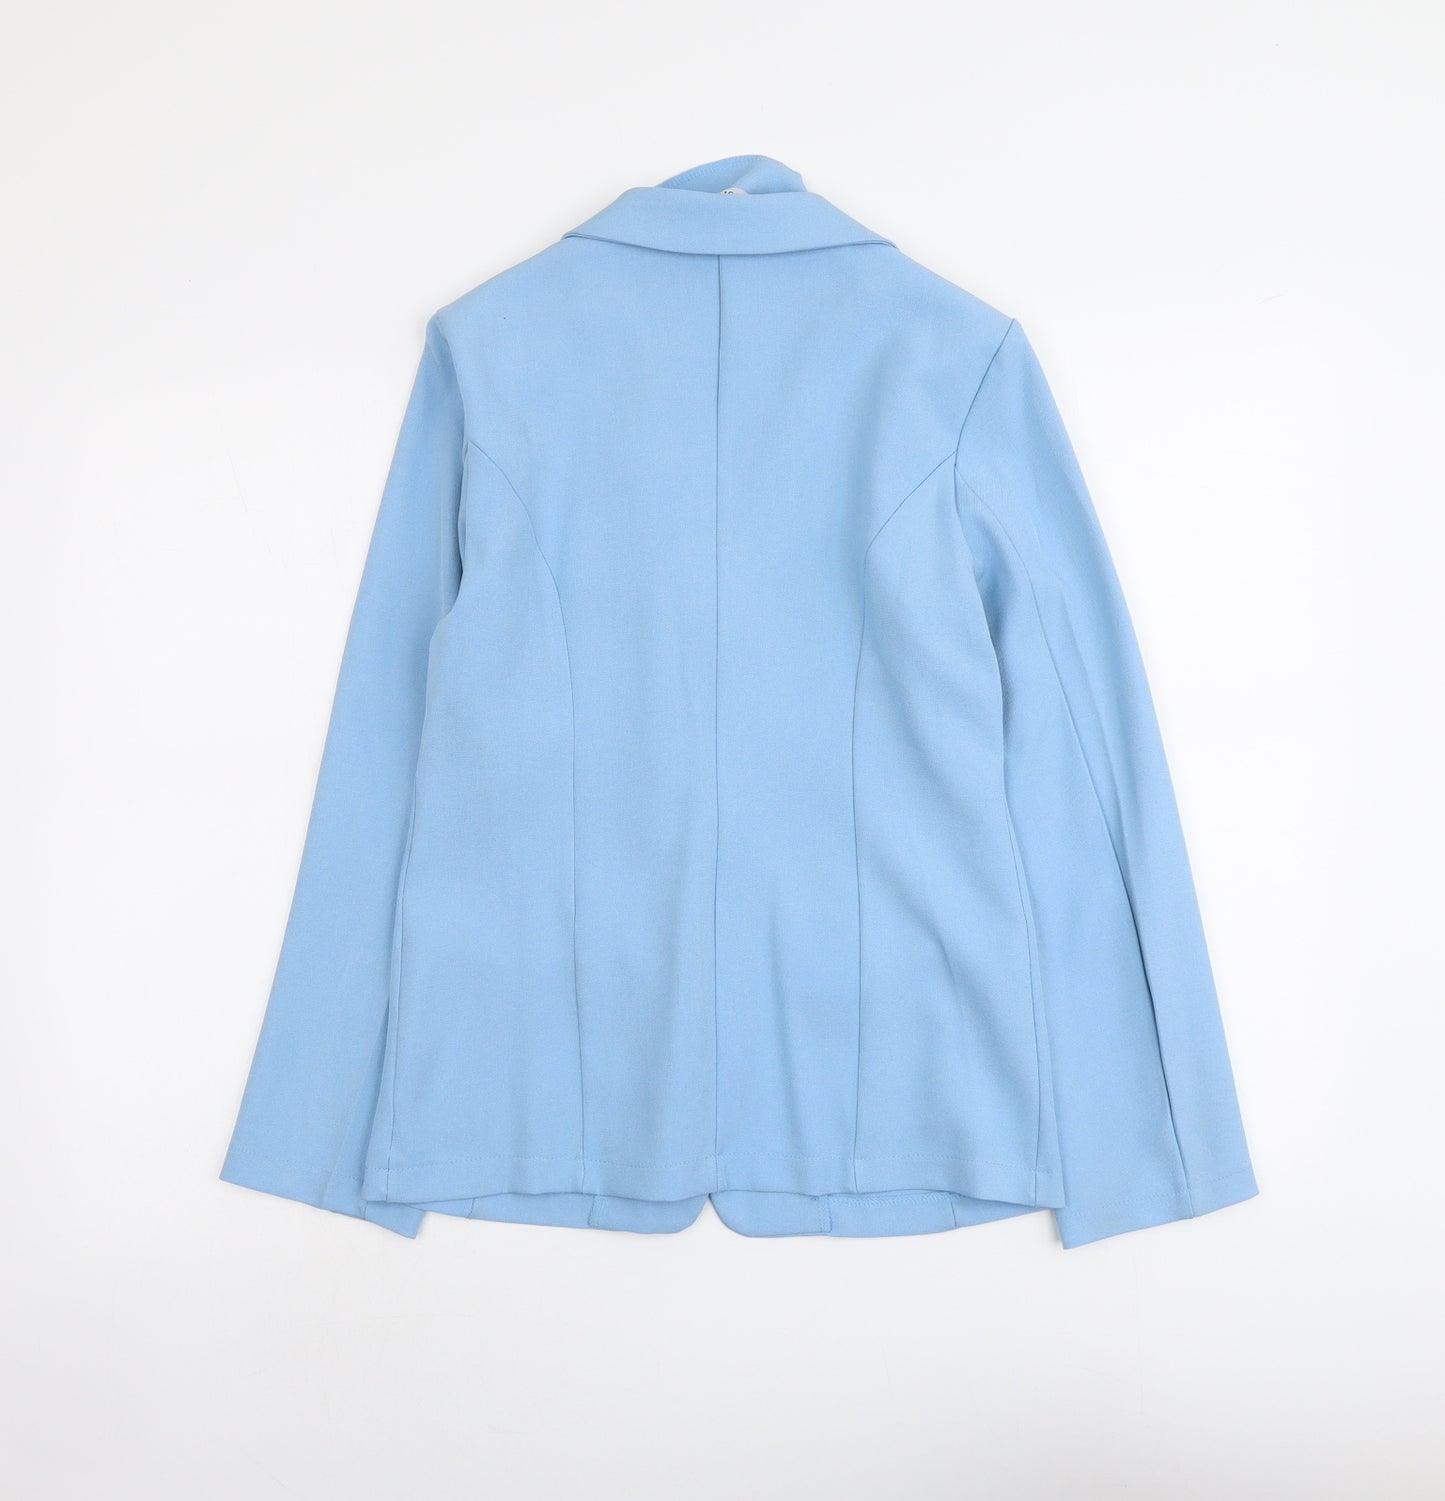 MissLook Womens Blue Polyester Jacket Blazer Size M